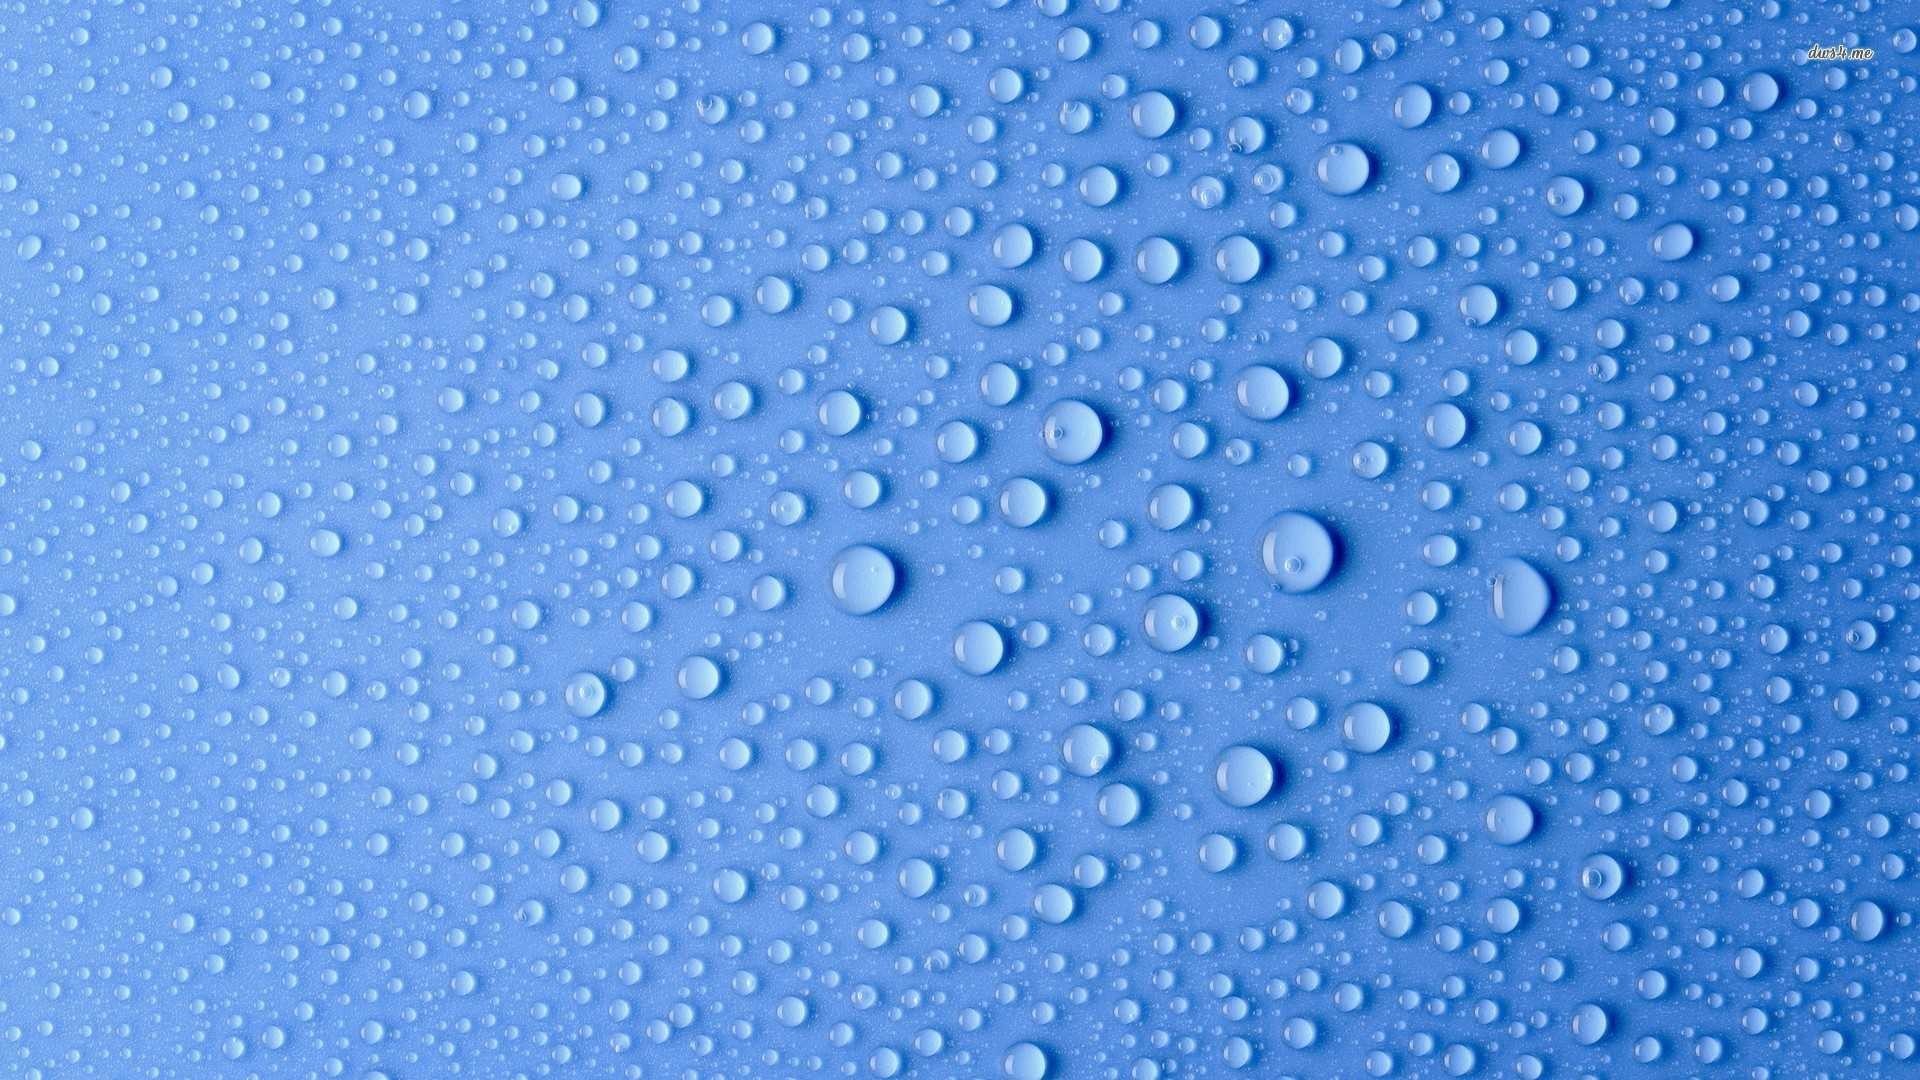 1920x1080 1920x1200 3D Water Drop Wallpaper image